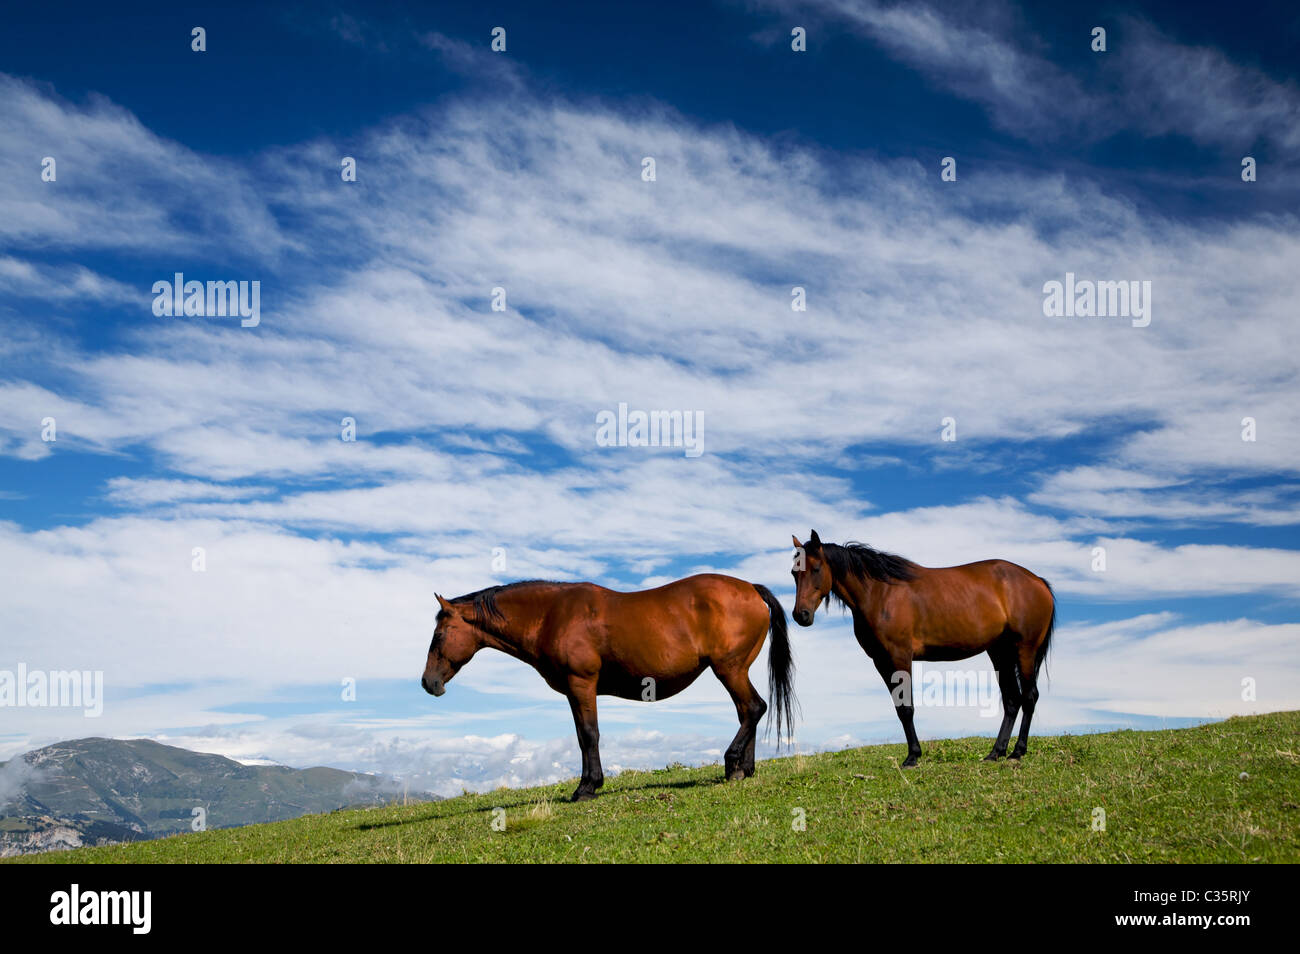 Cheval en pâturage, Revoltel alp, montagnes Lessini, Trentin-Haut-Adige, Italie, Europe Banque D'Images